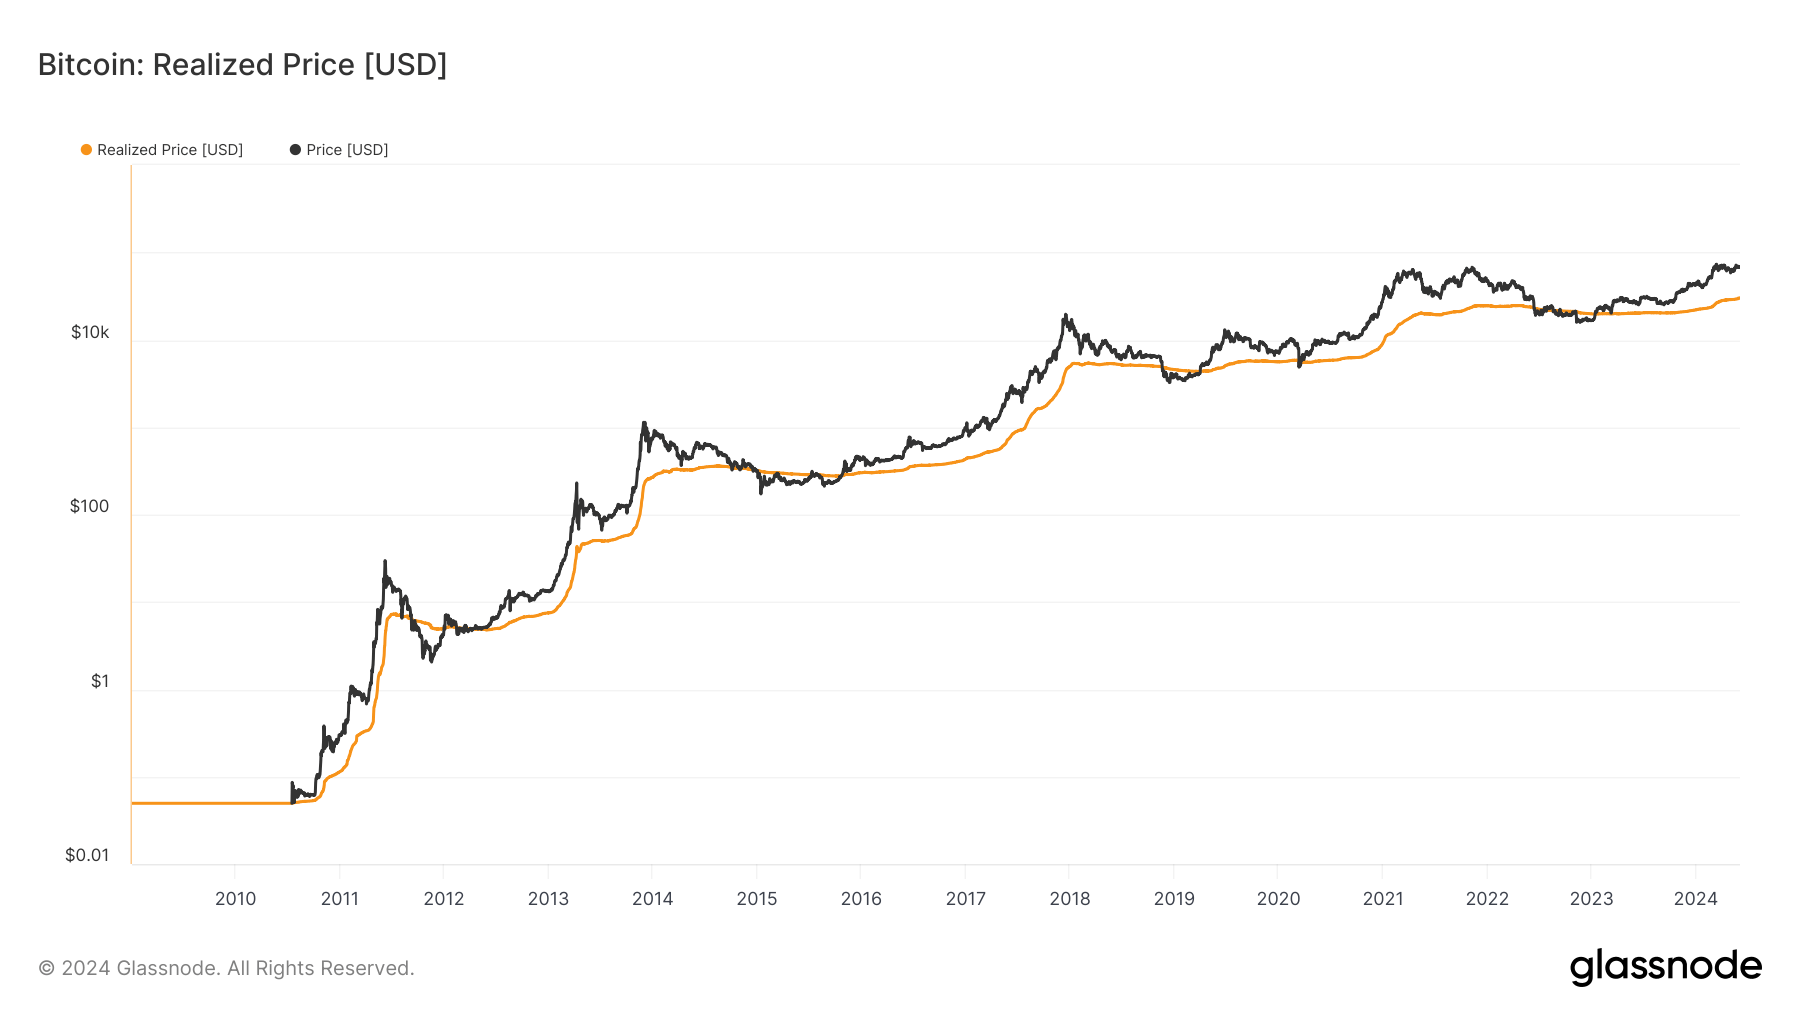 Bitcoin’s realized price surpasses $30,000